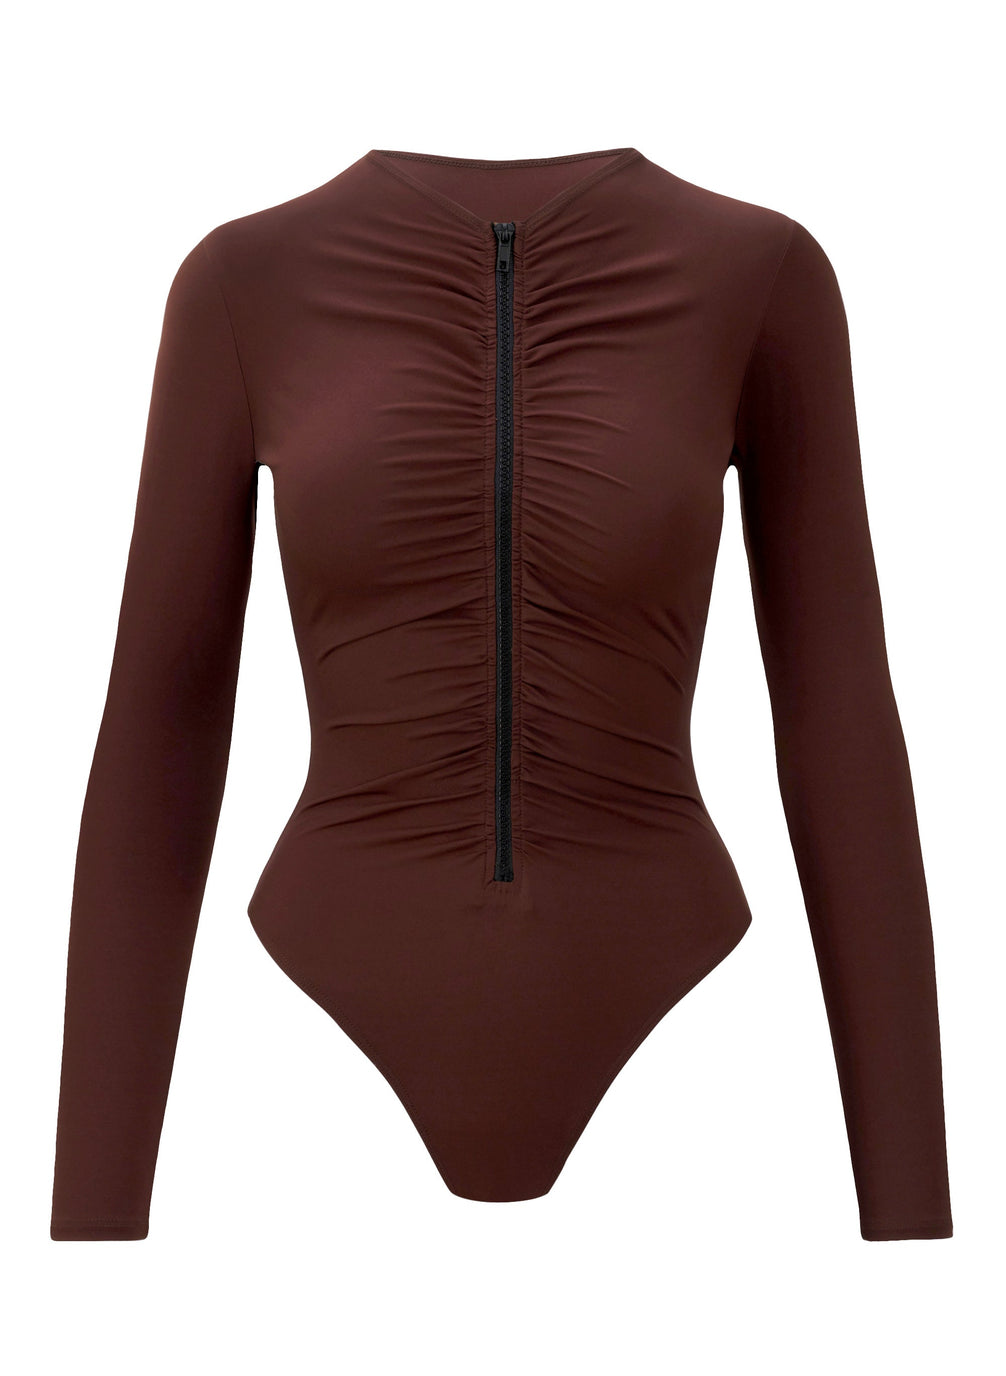 flatlay of brown long sleeve zip front swimsuit